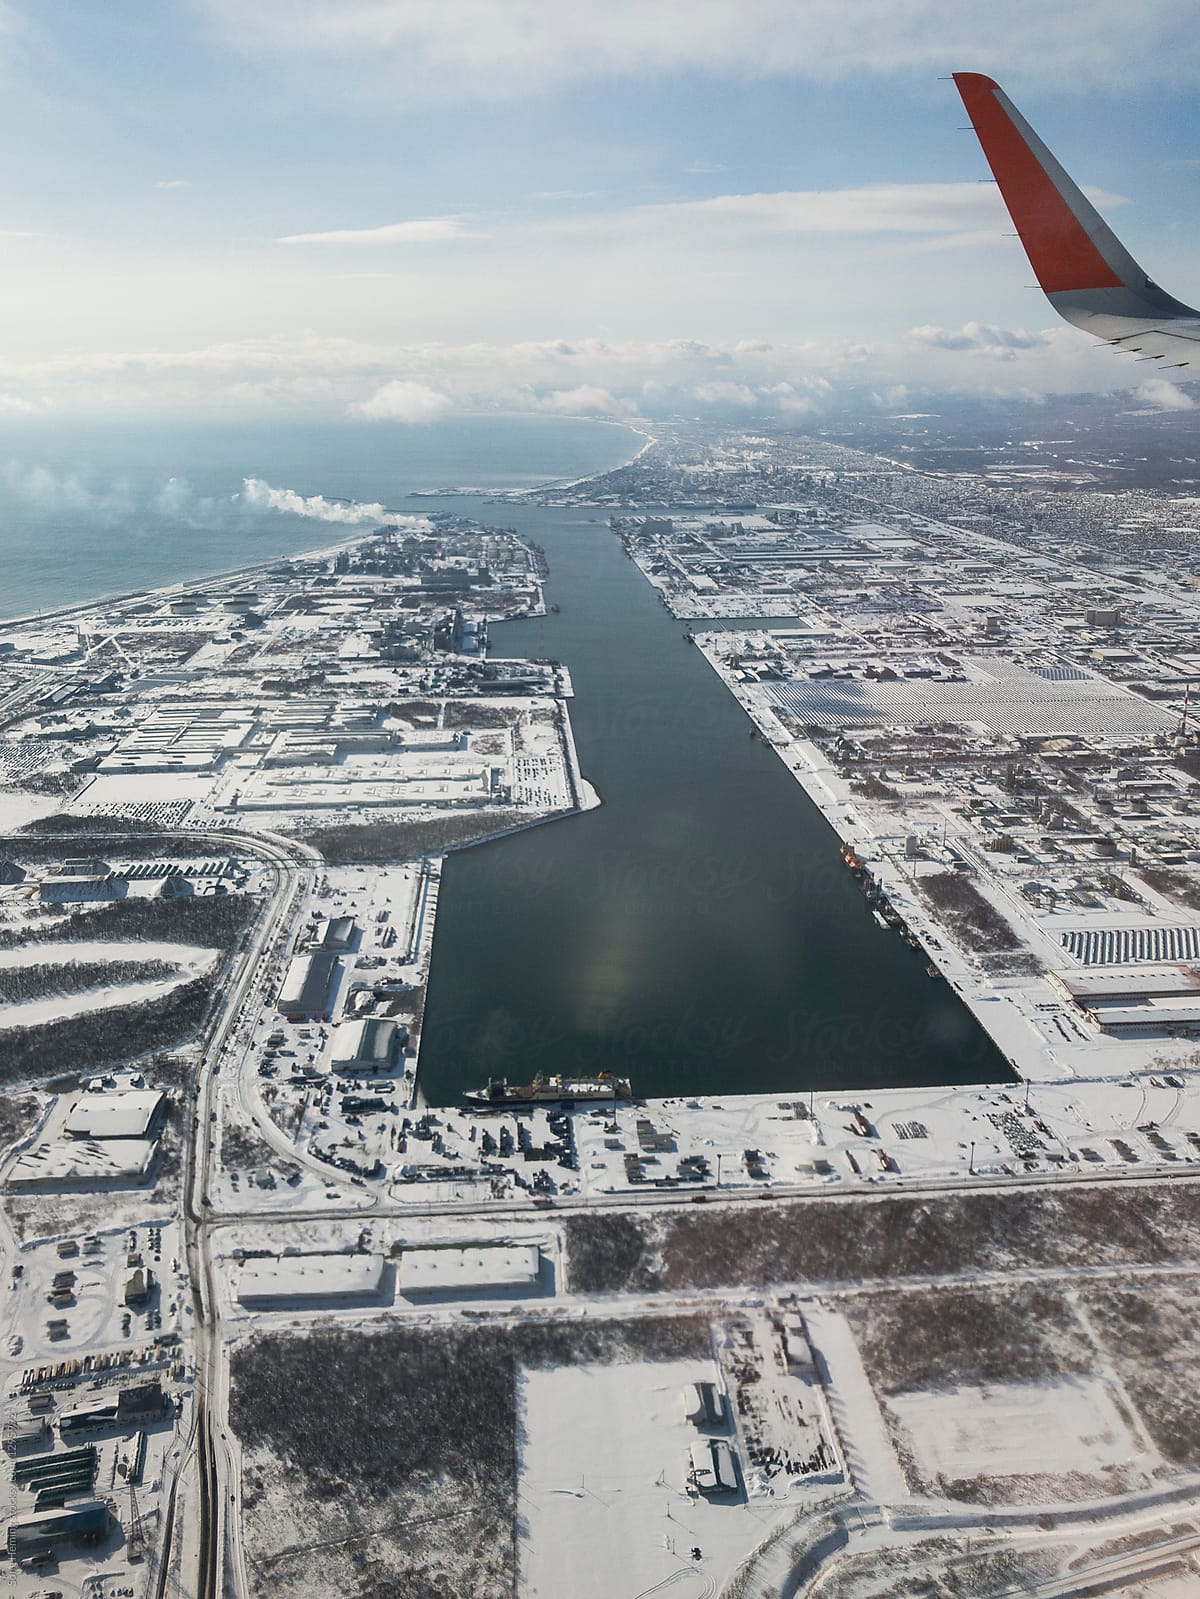 Aerial view of Hokkaido island Japan